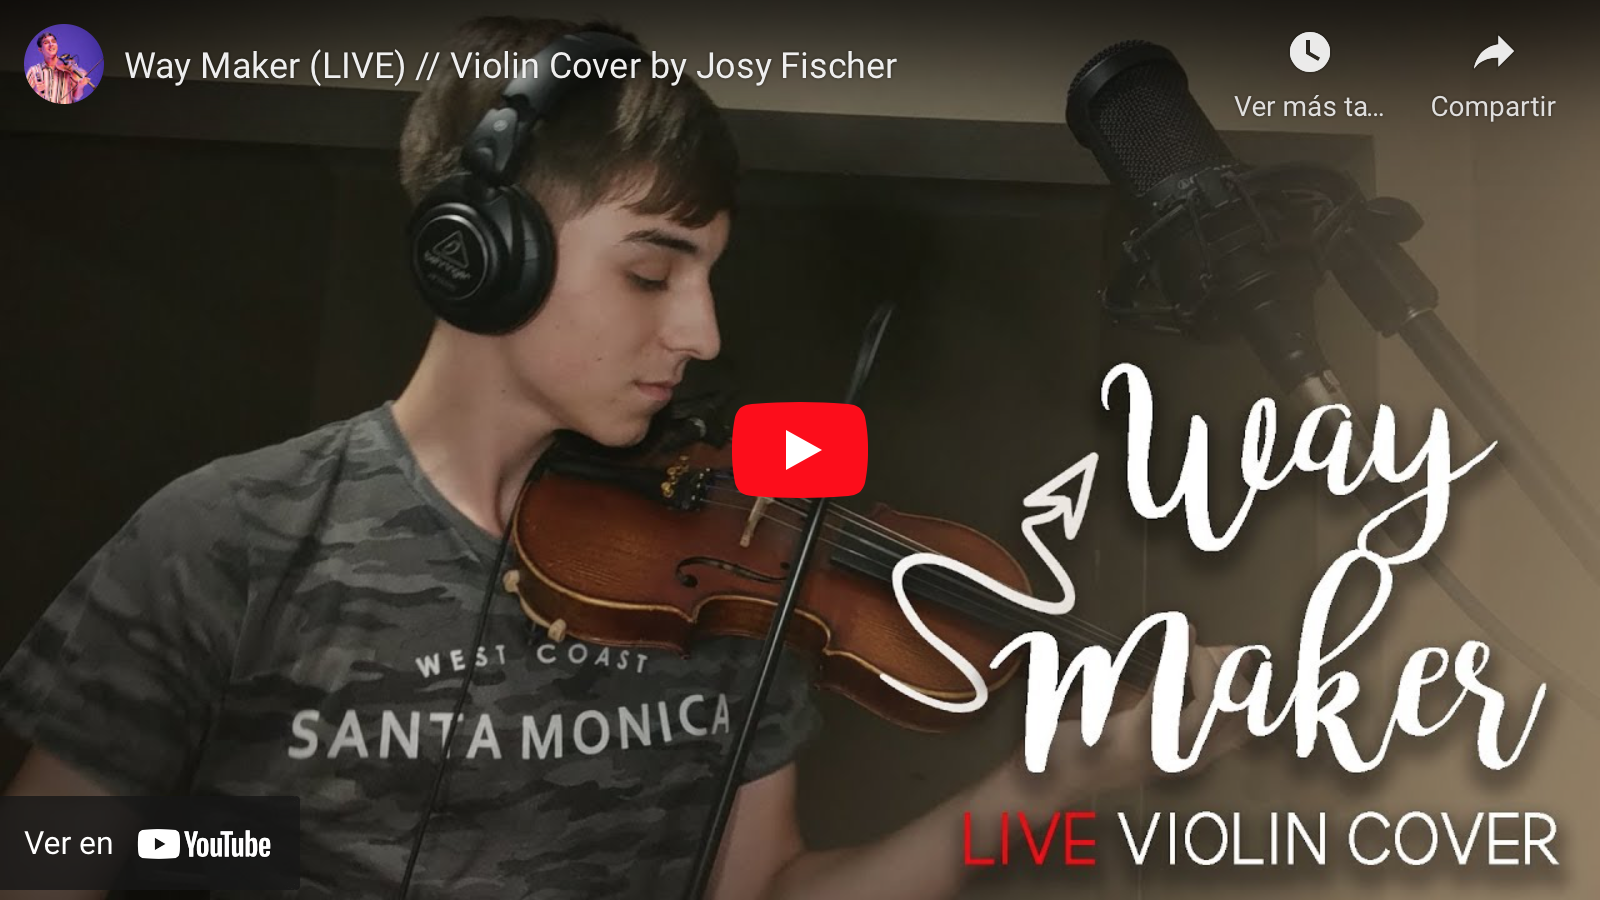 Way Maker en violín